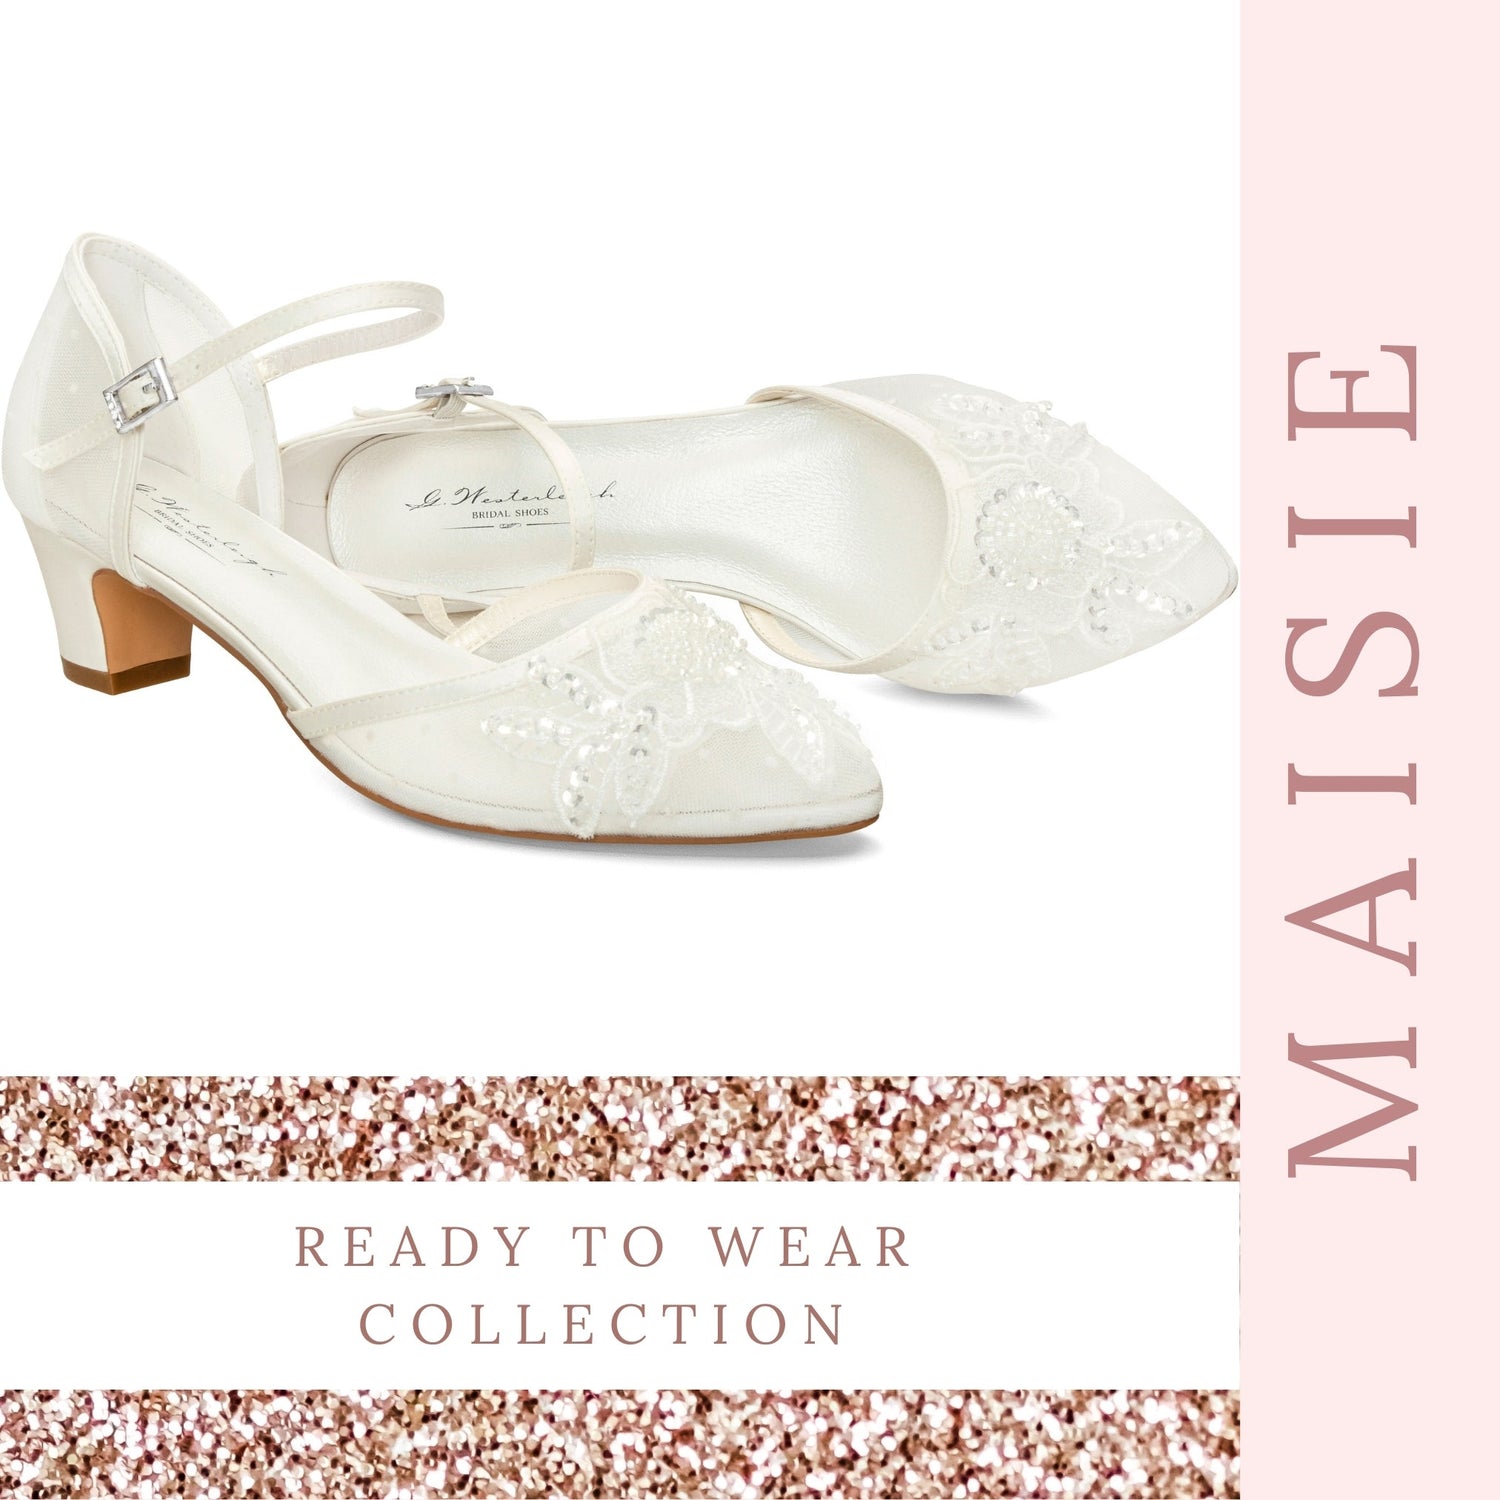 maisie-wedding-shoes